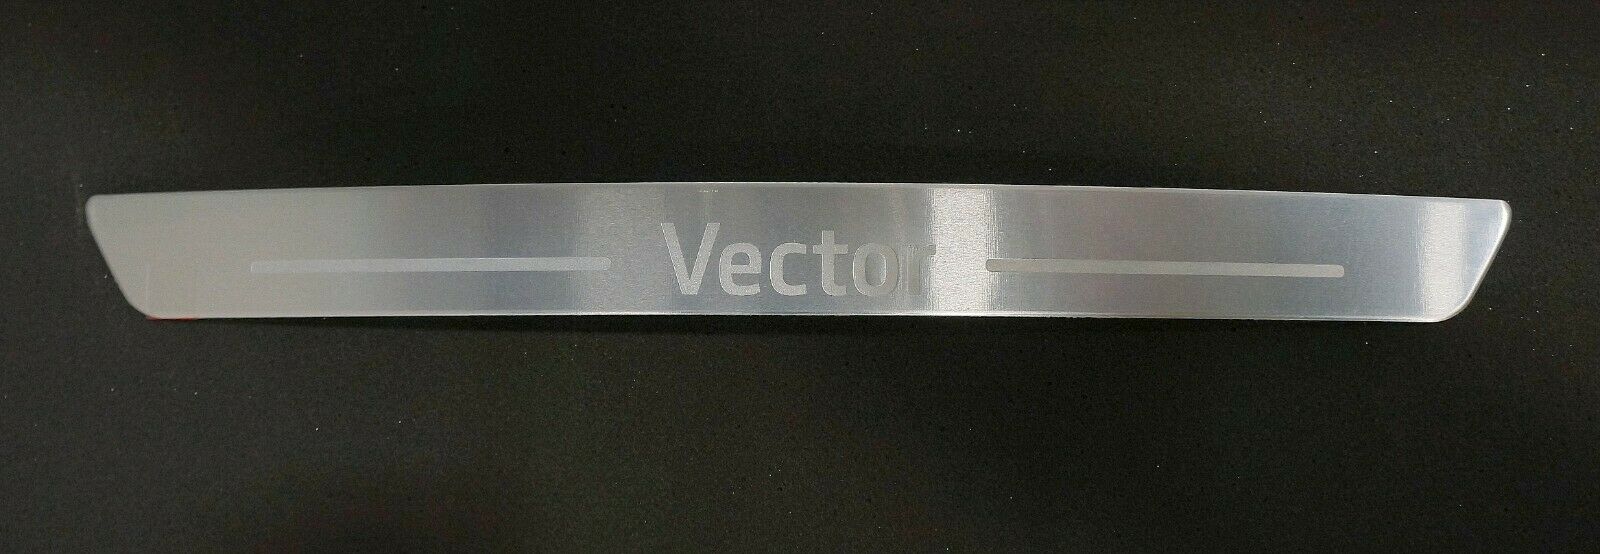 vector.jpg